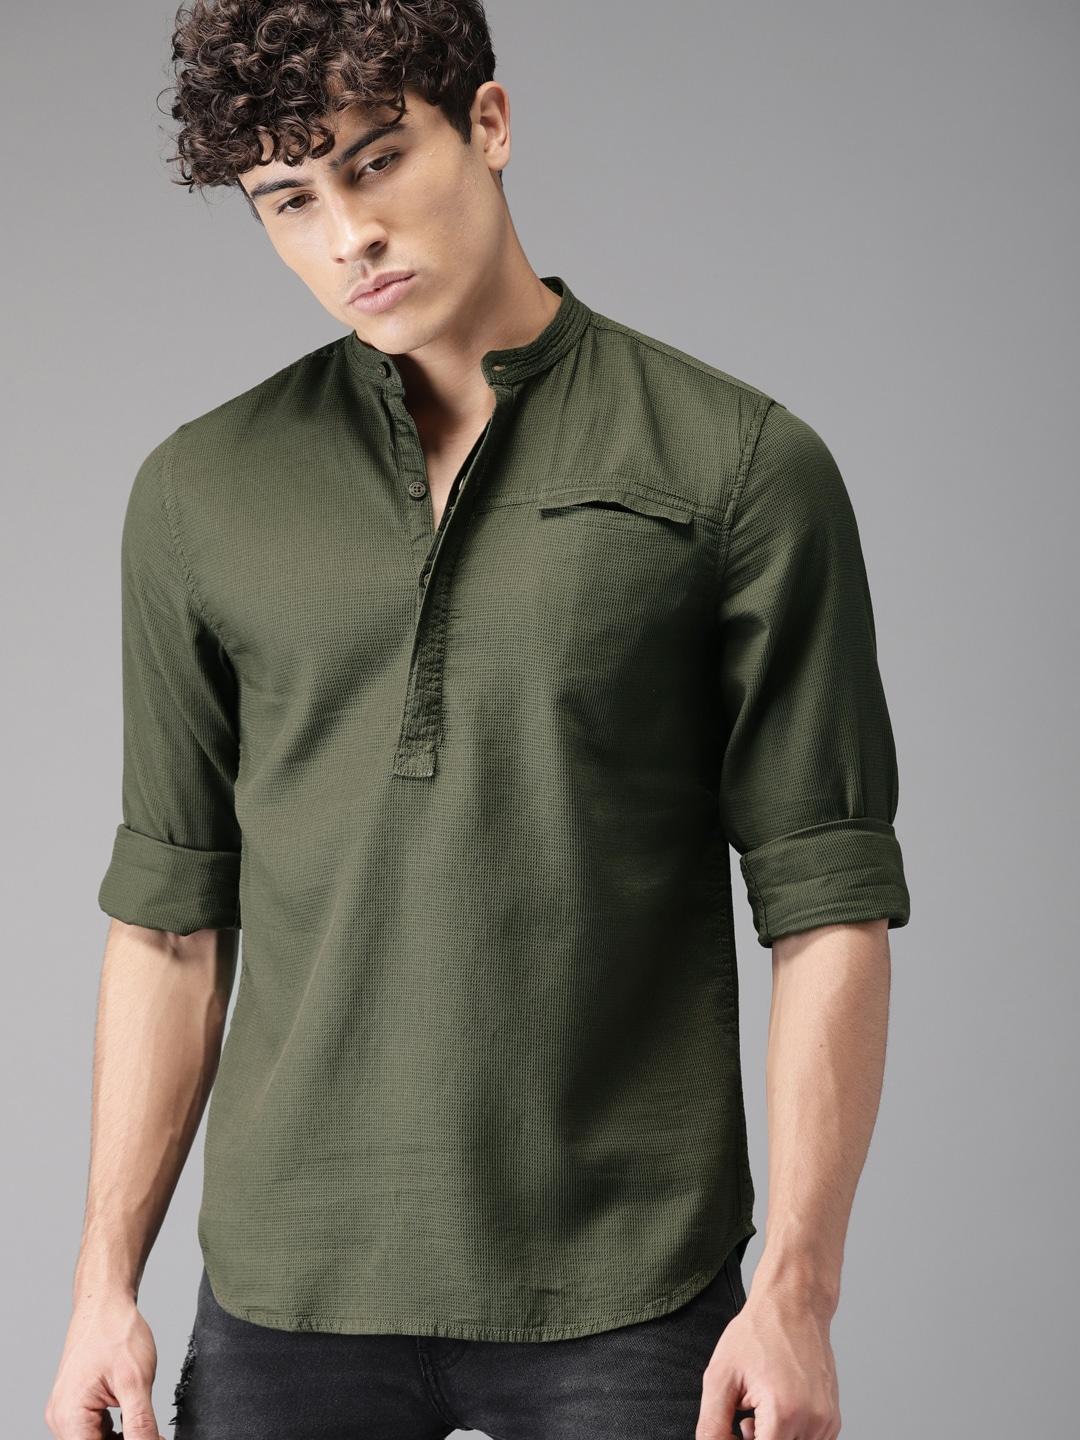 here&now-men-olive-green-regular-fit-self-design-casual-shirt